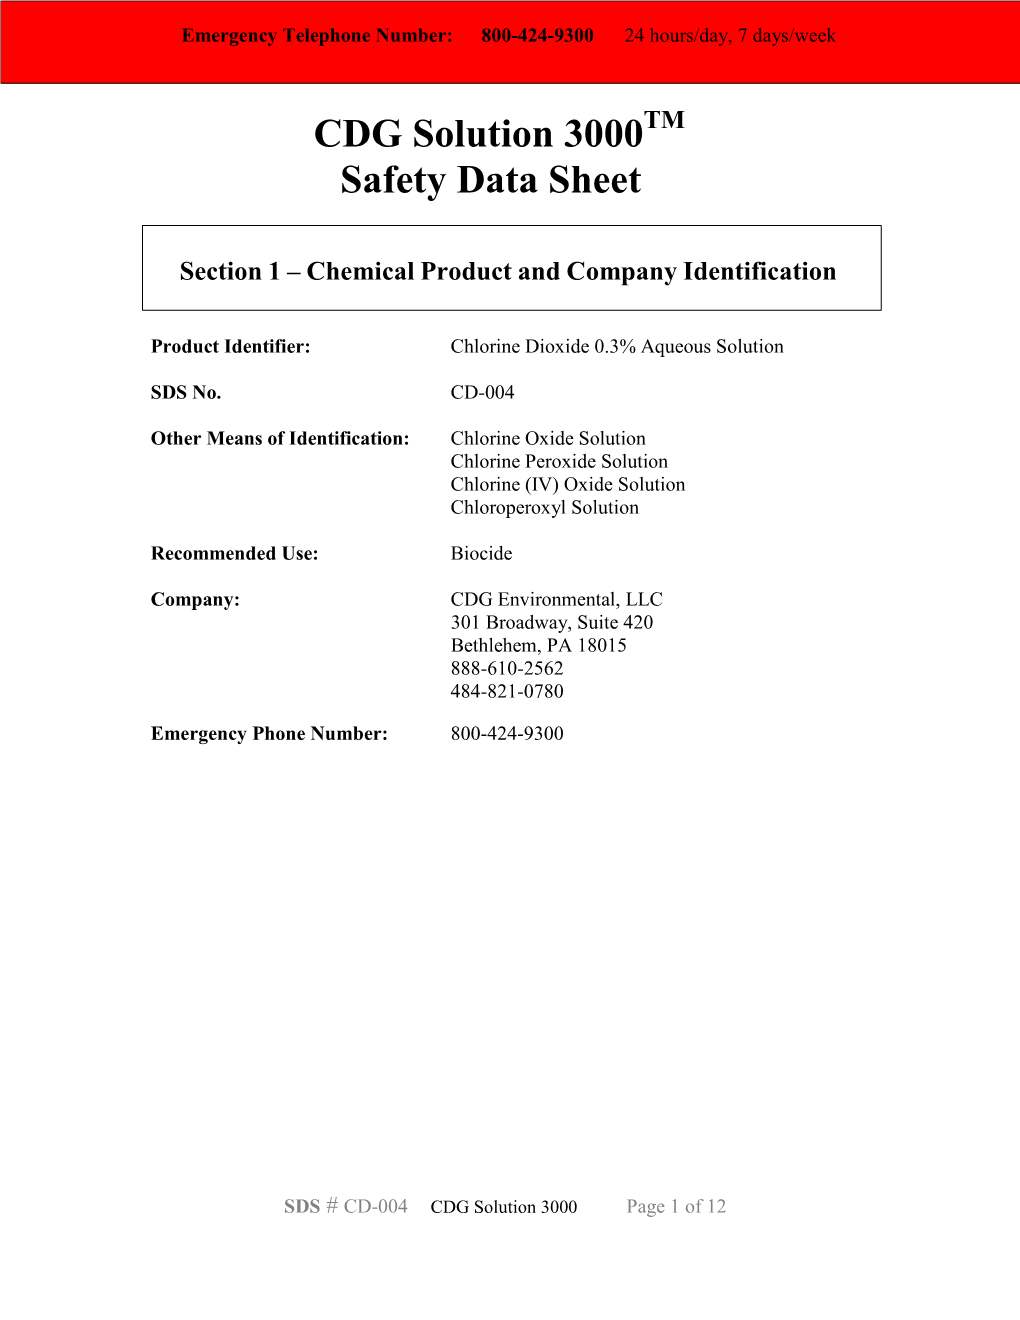 CDG Solution 3000TM Safety Data Sheet